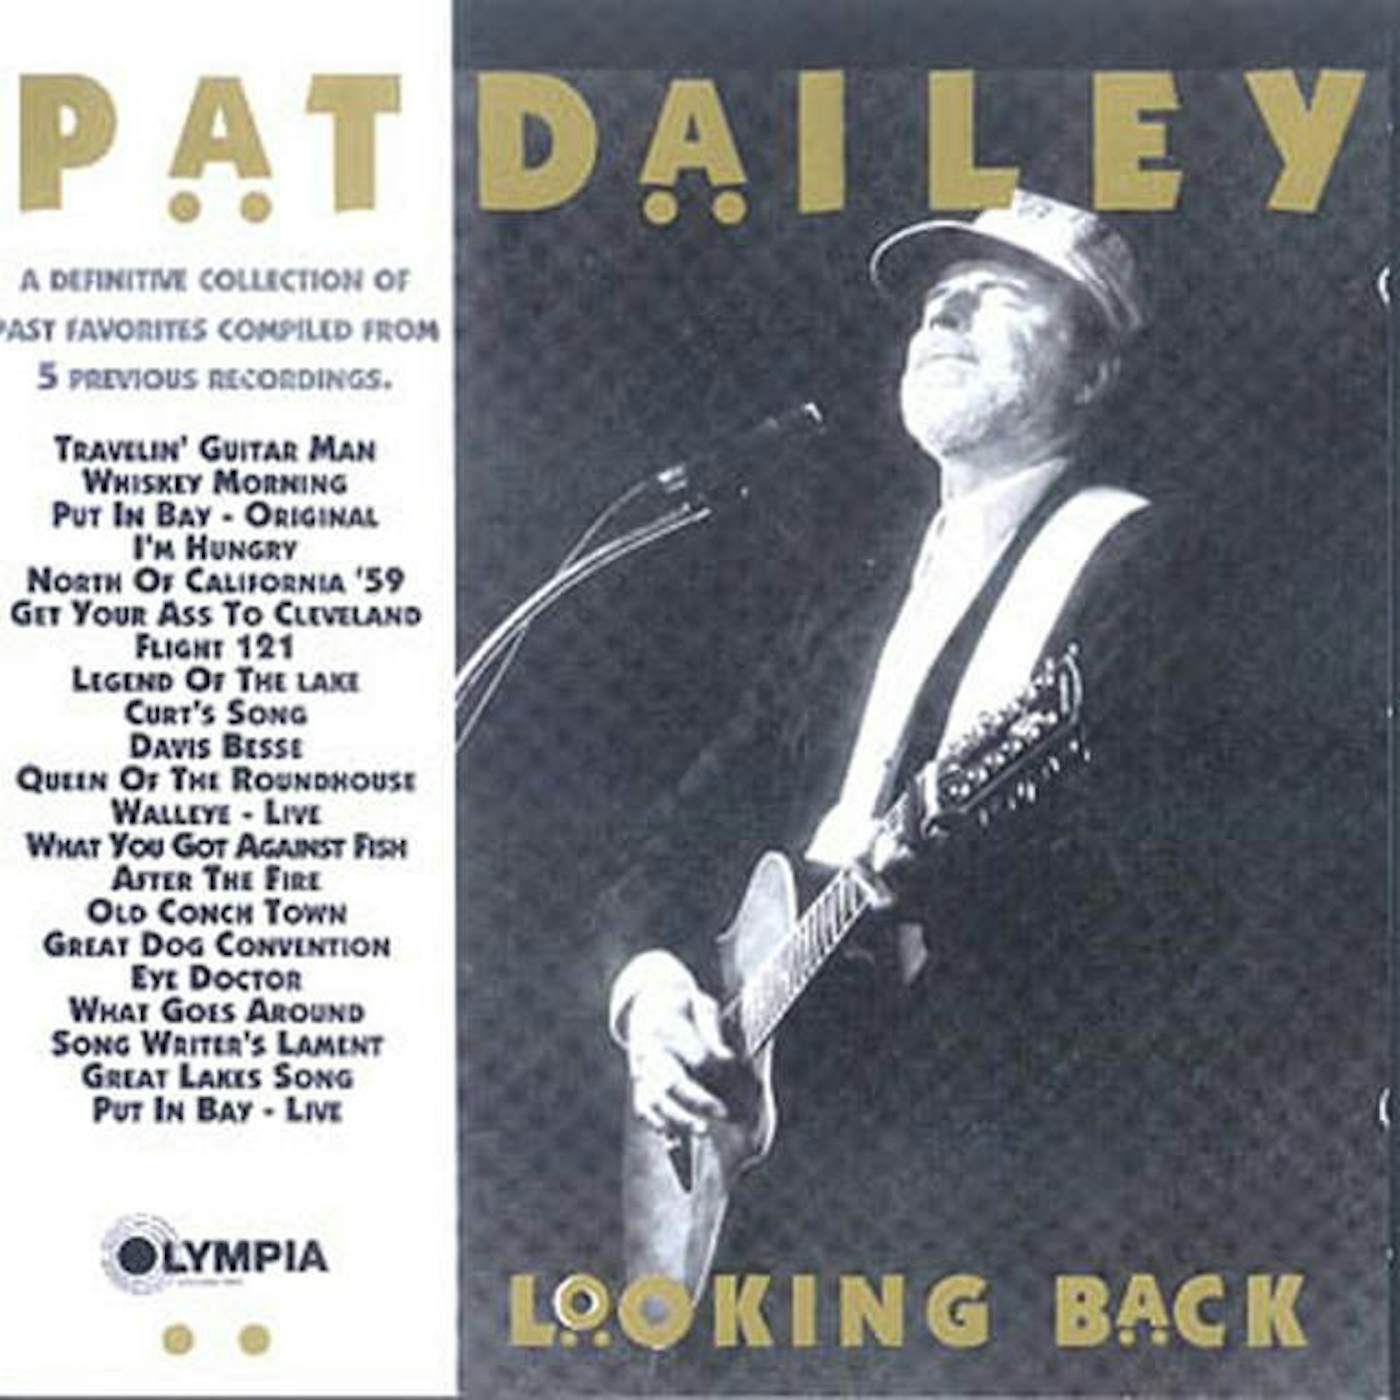 Pat Dailey